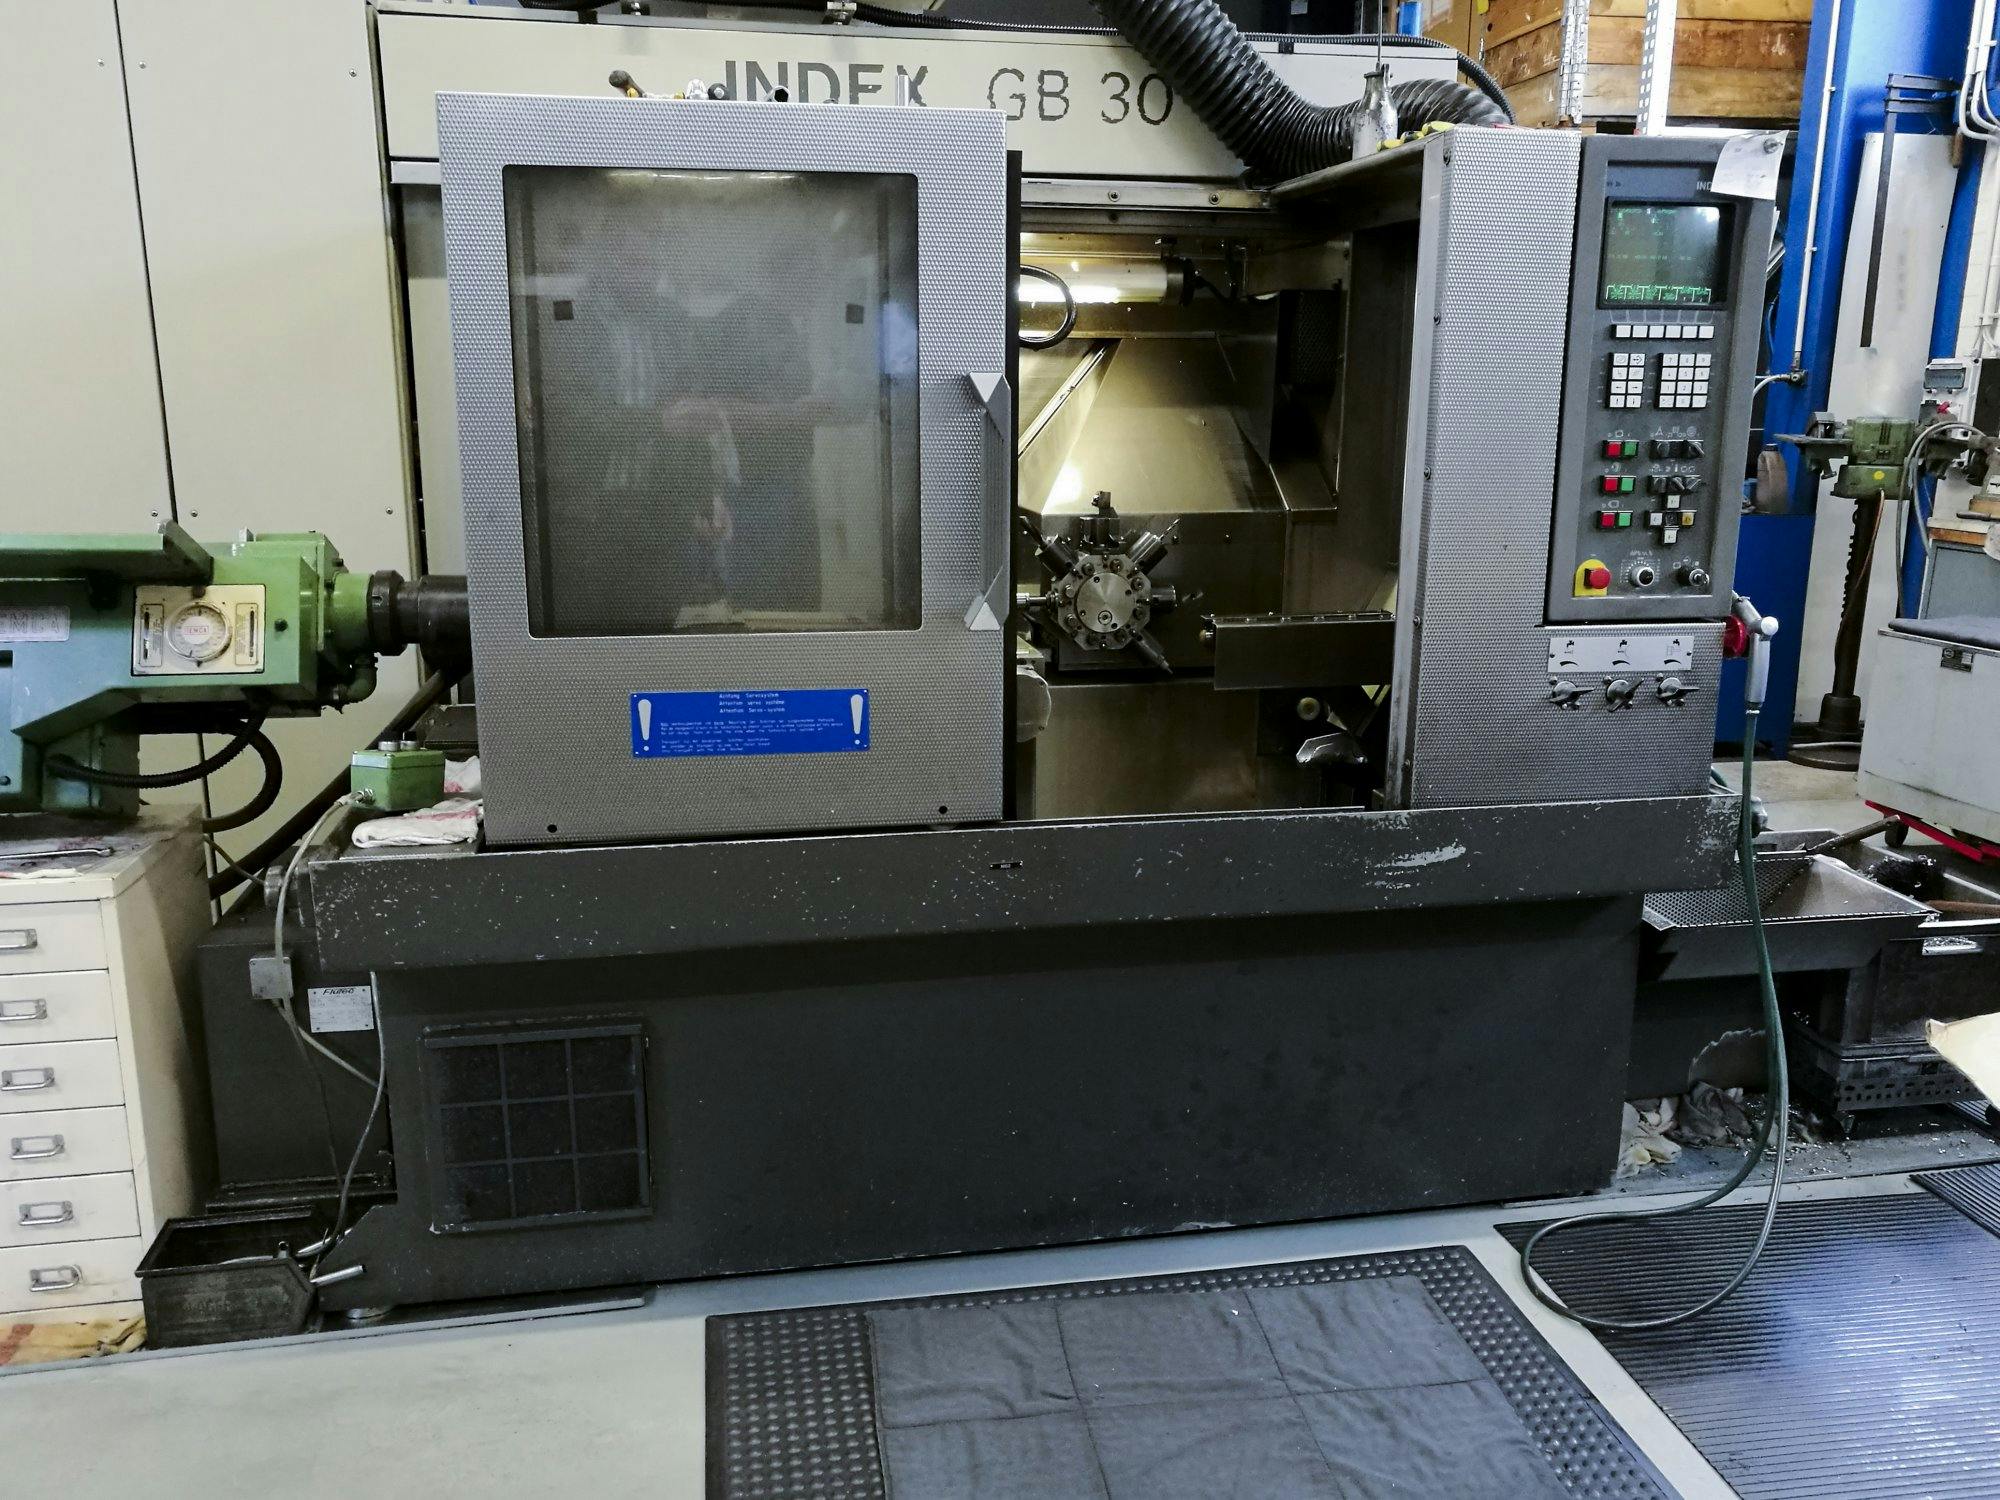 Frontansicht der Index GB 30 CNC Longturning Lathe Maschine